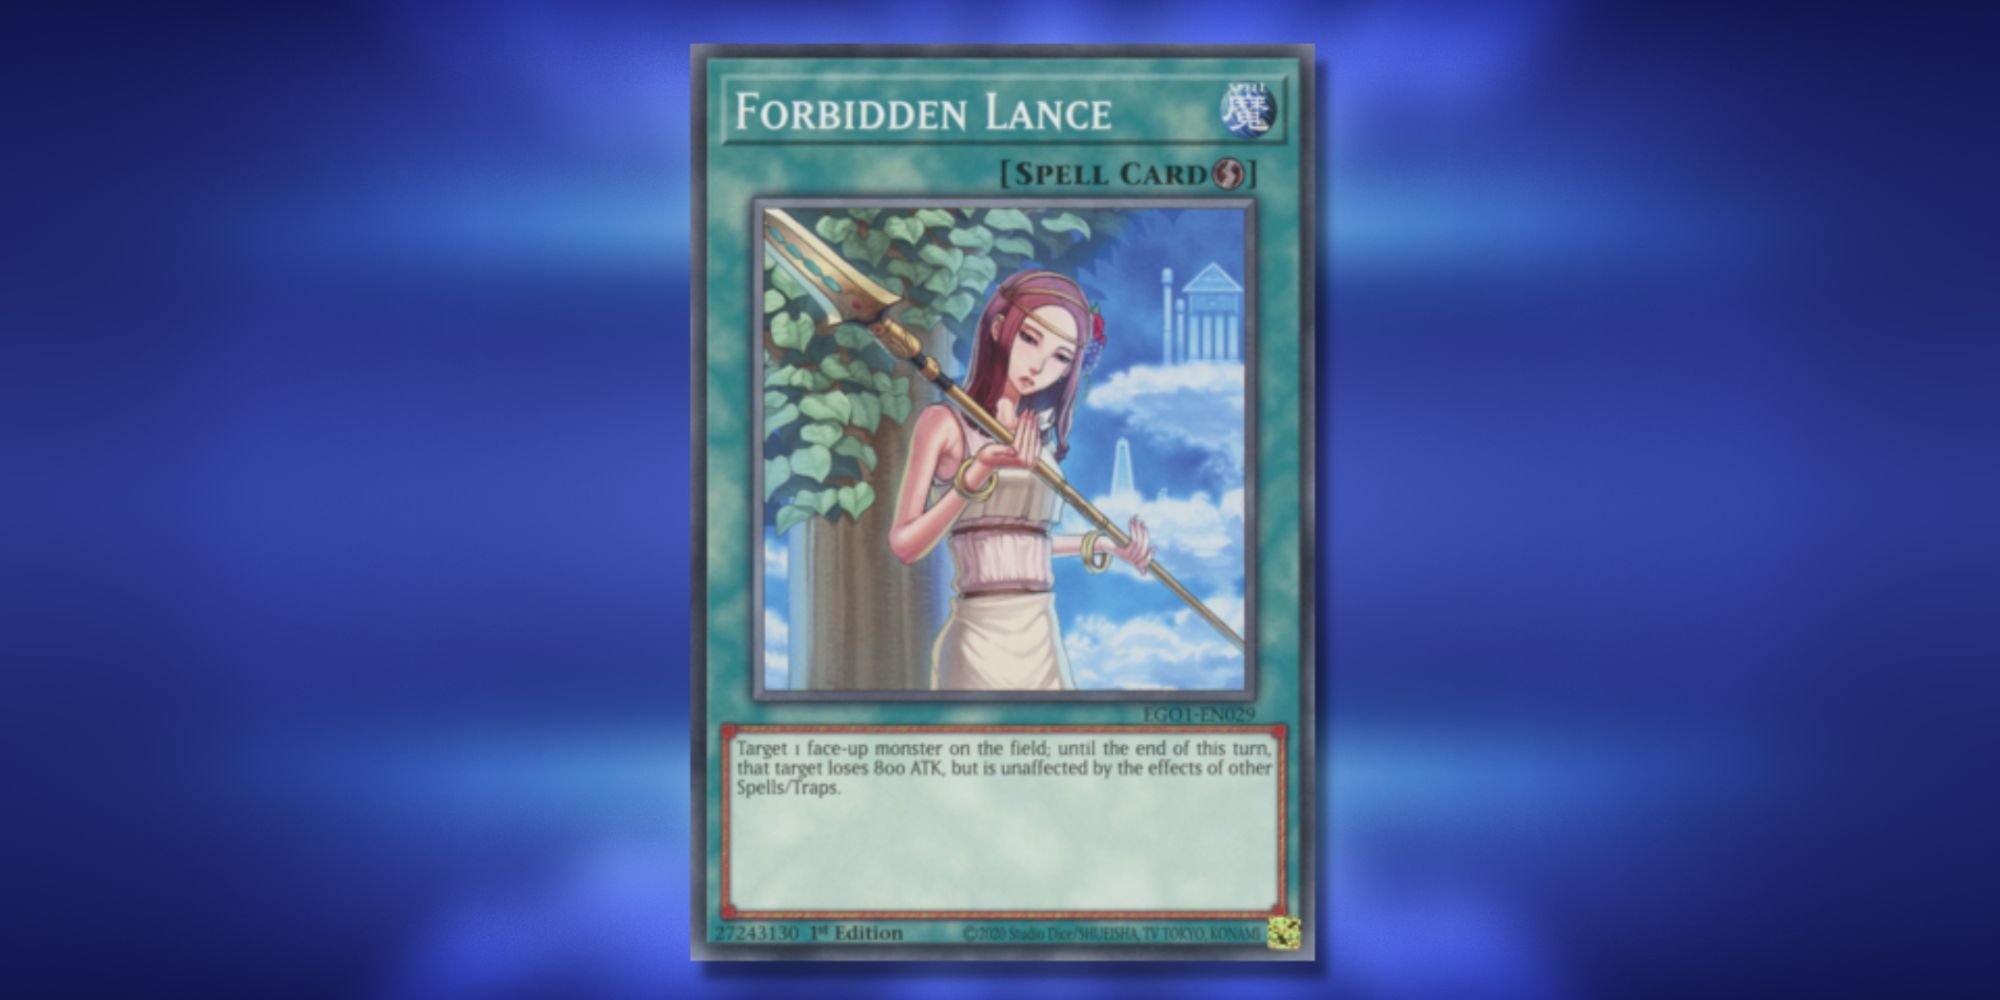 Yu-Gi-Oh! Card Forbidden Lance on a blurred blue background.